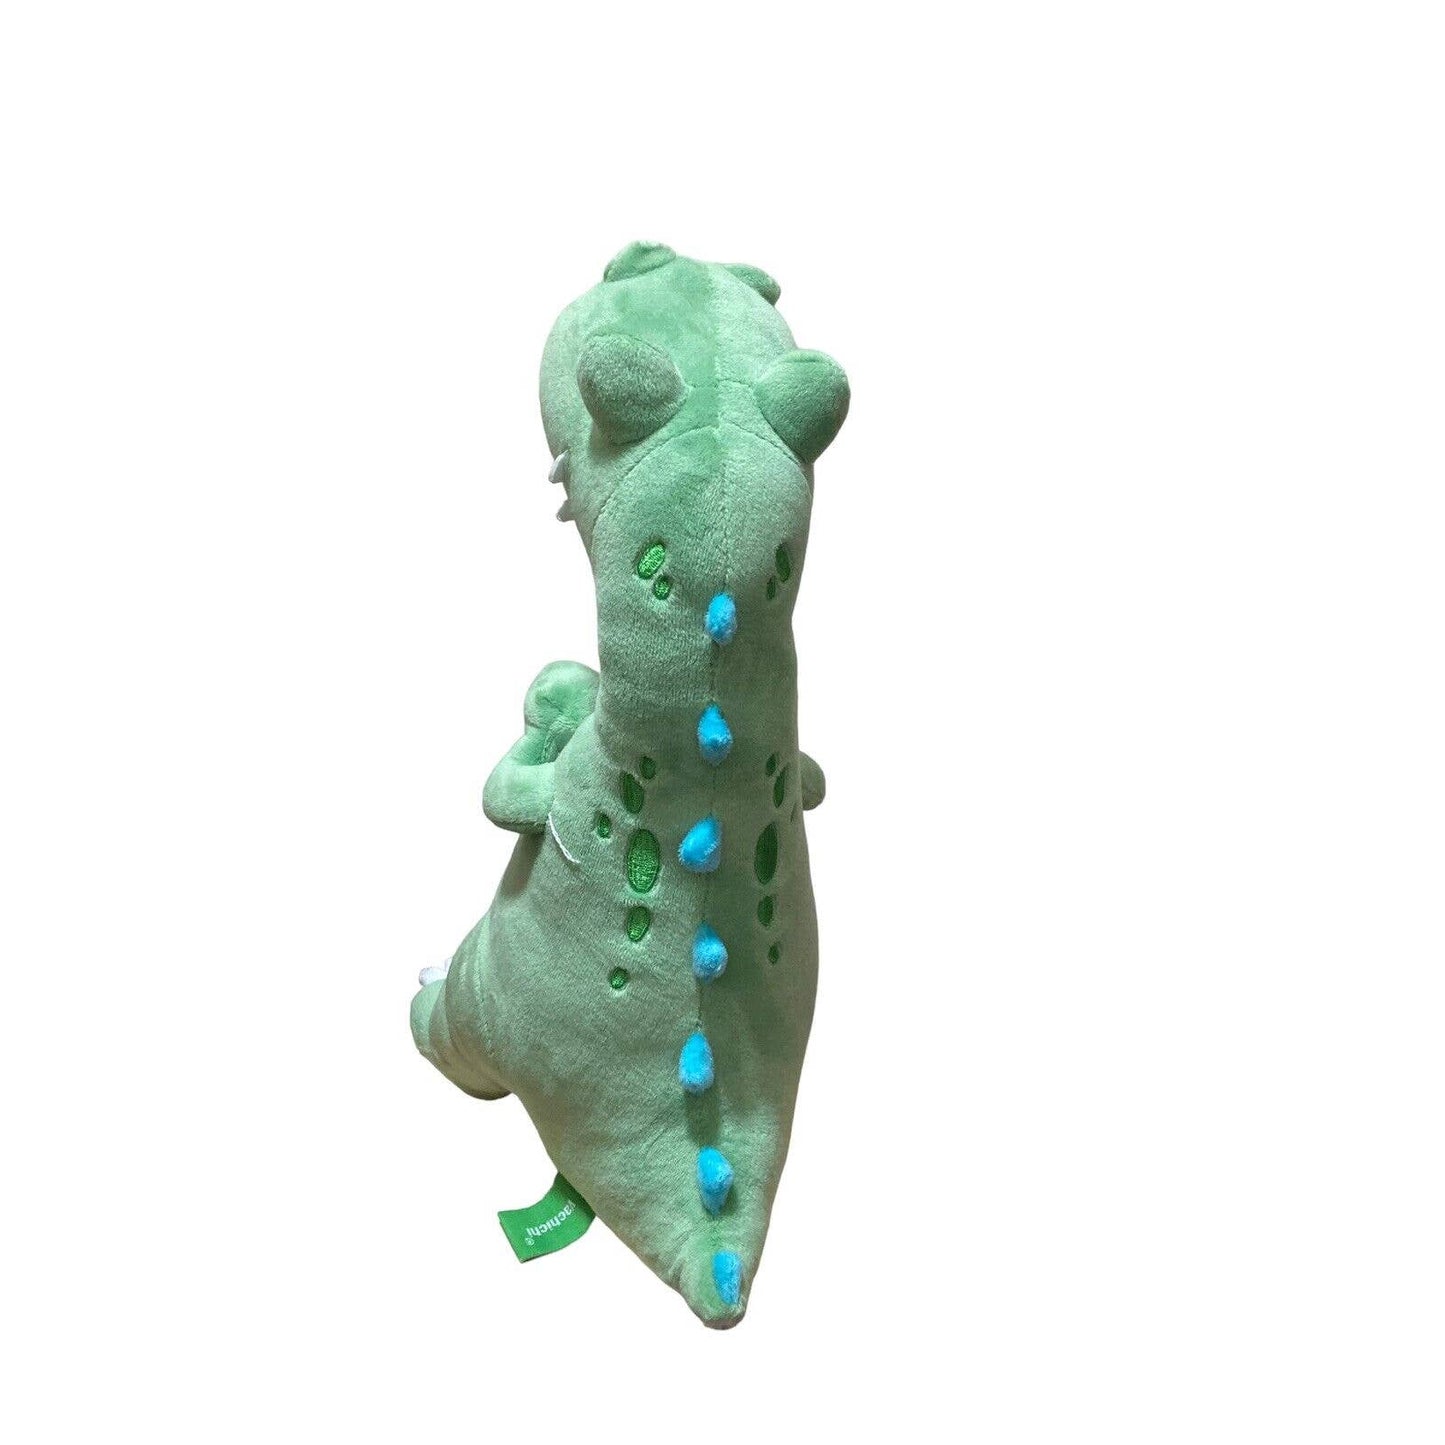 VACHICHI 14 Inches Green T Rex Plush Dinosaur Toy Stuffed Animal Dinosaur